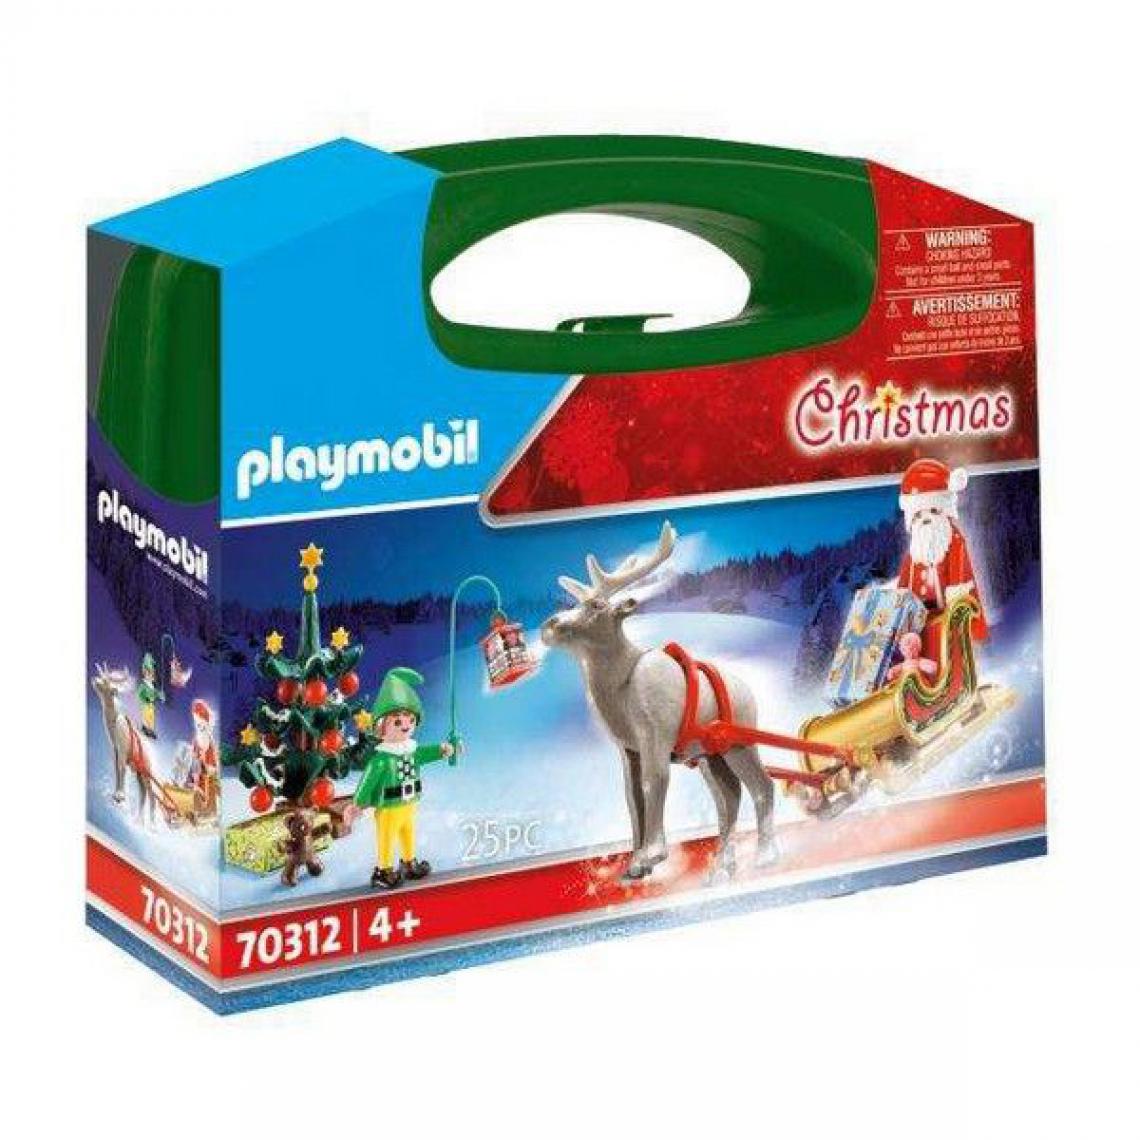 Fox Pathe Europa - Playset Playmobil Christmas Playmobil ( 25 pcs) - Poupées